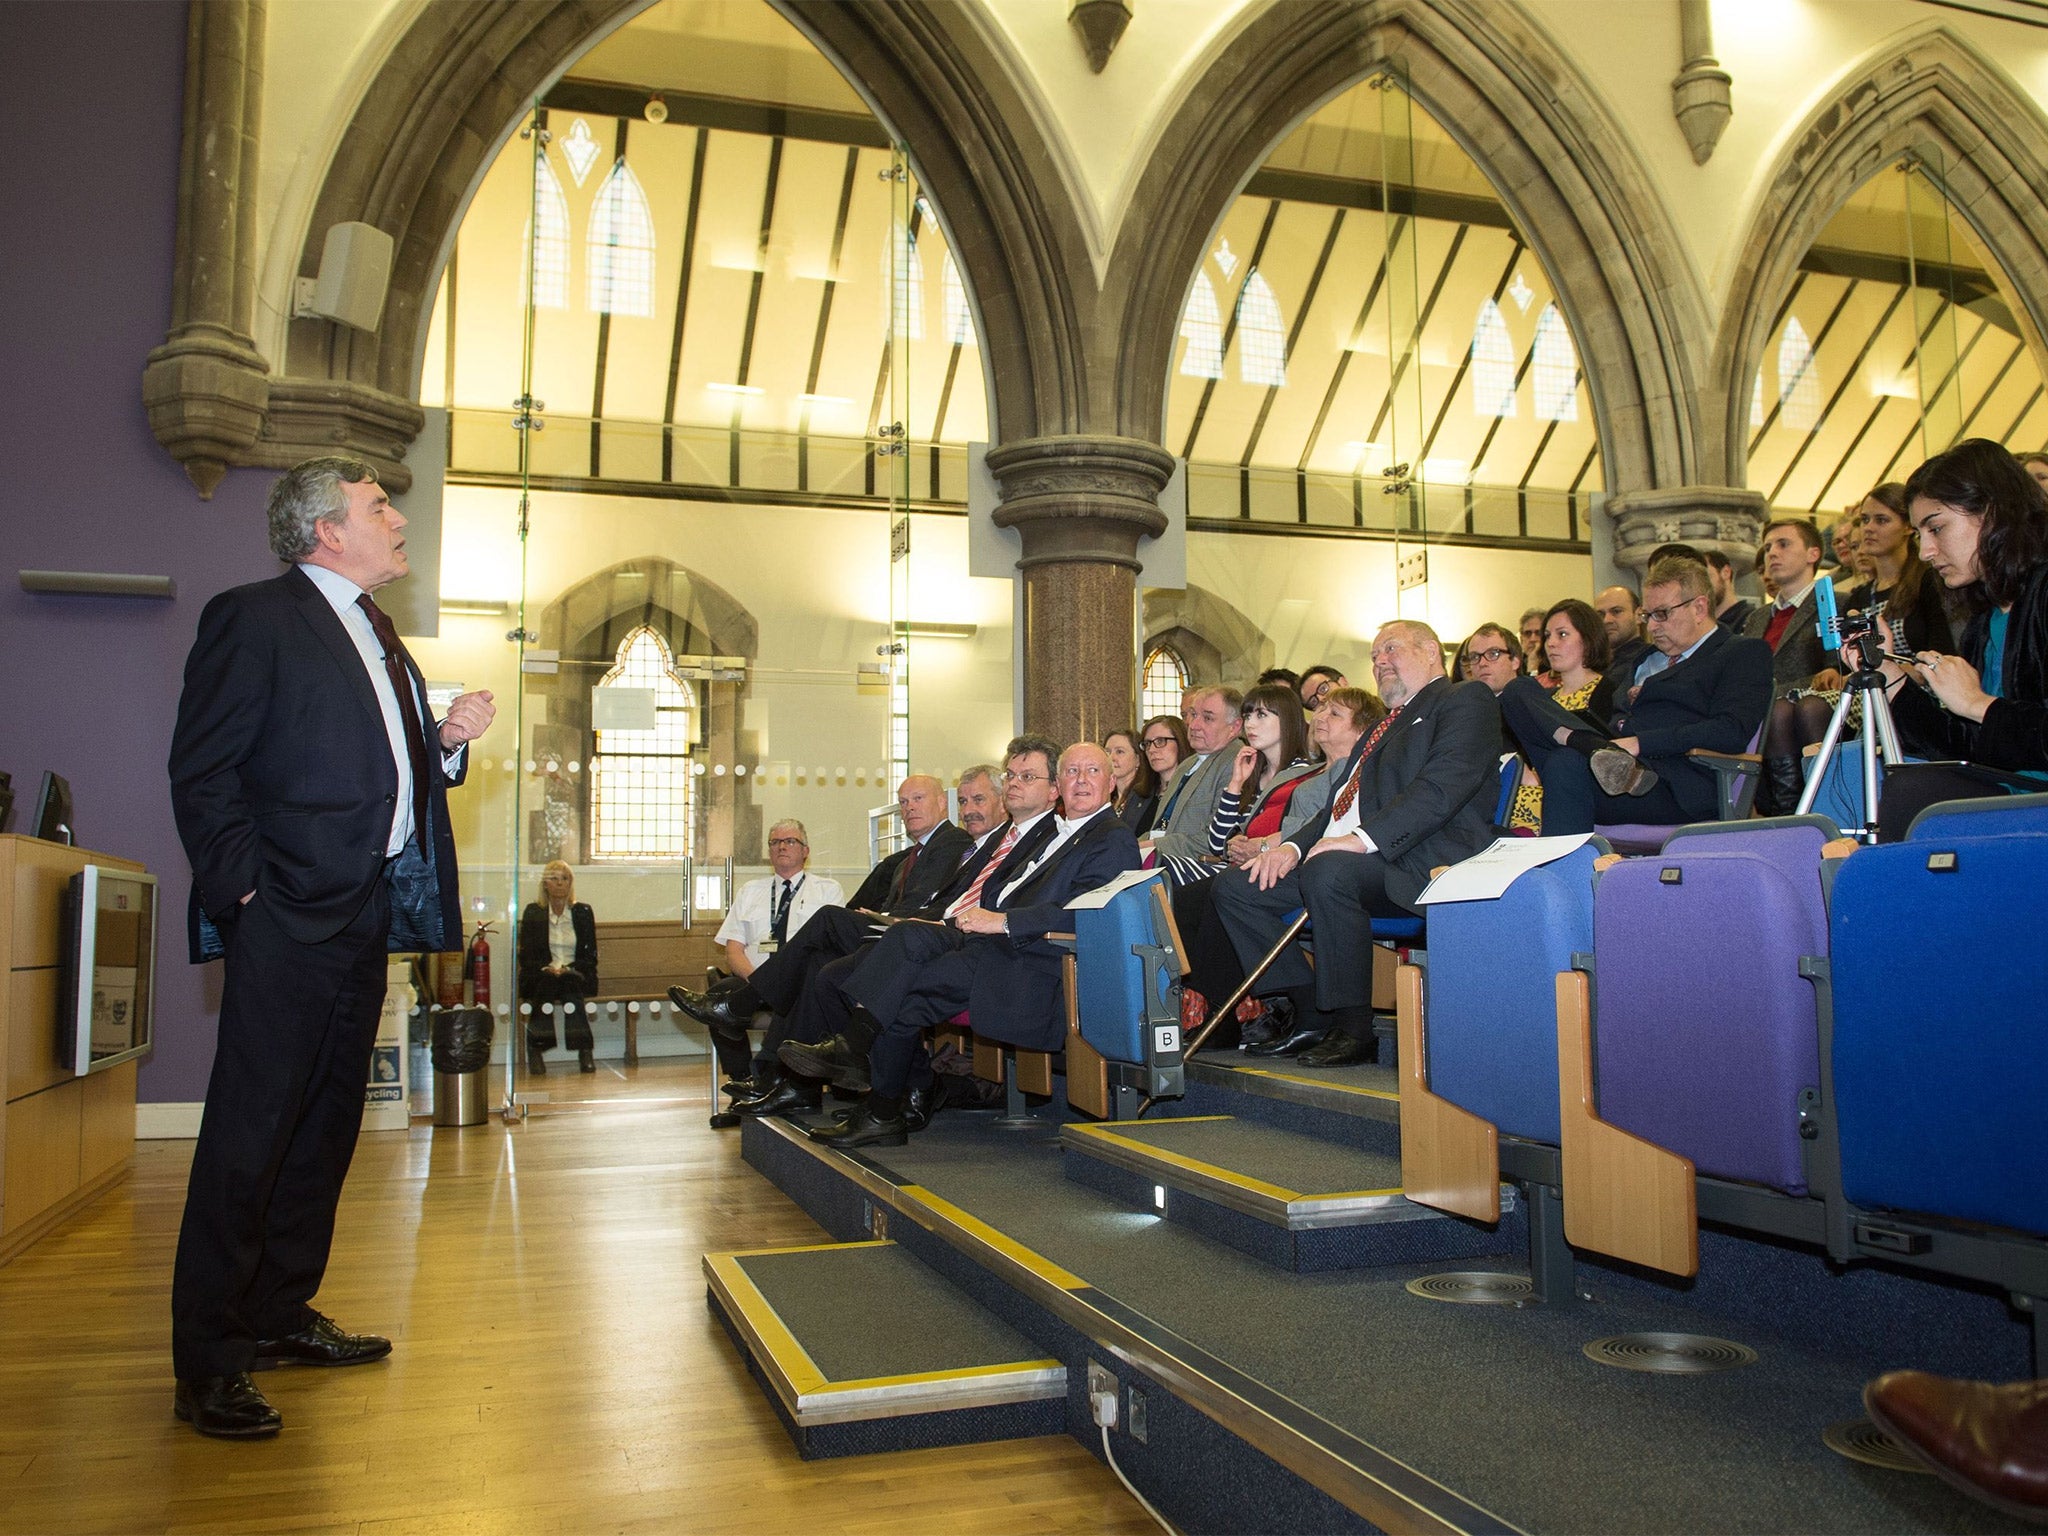 The former Prime Minister speaking at Glasgow University